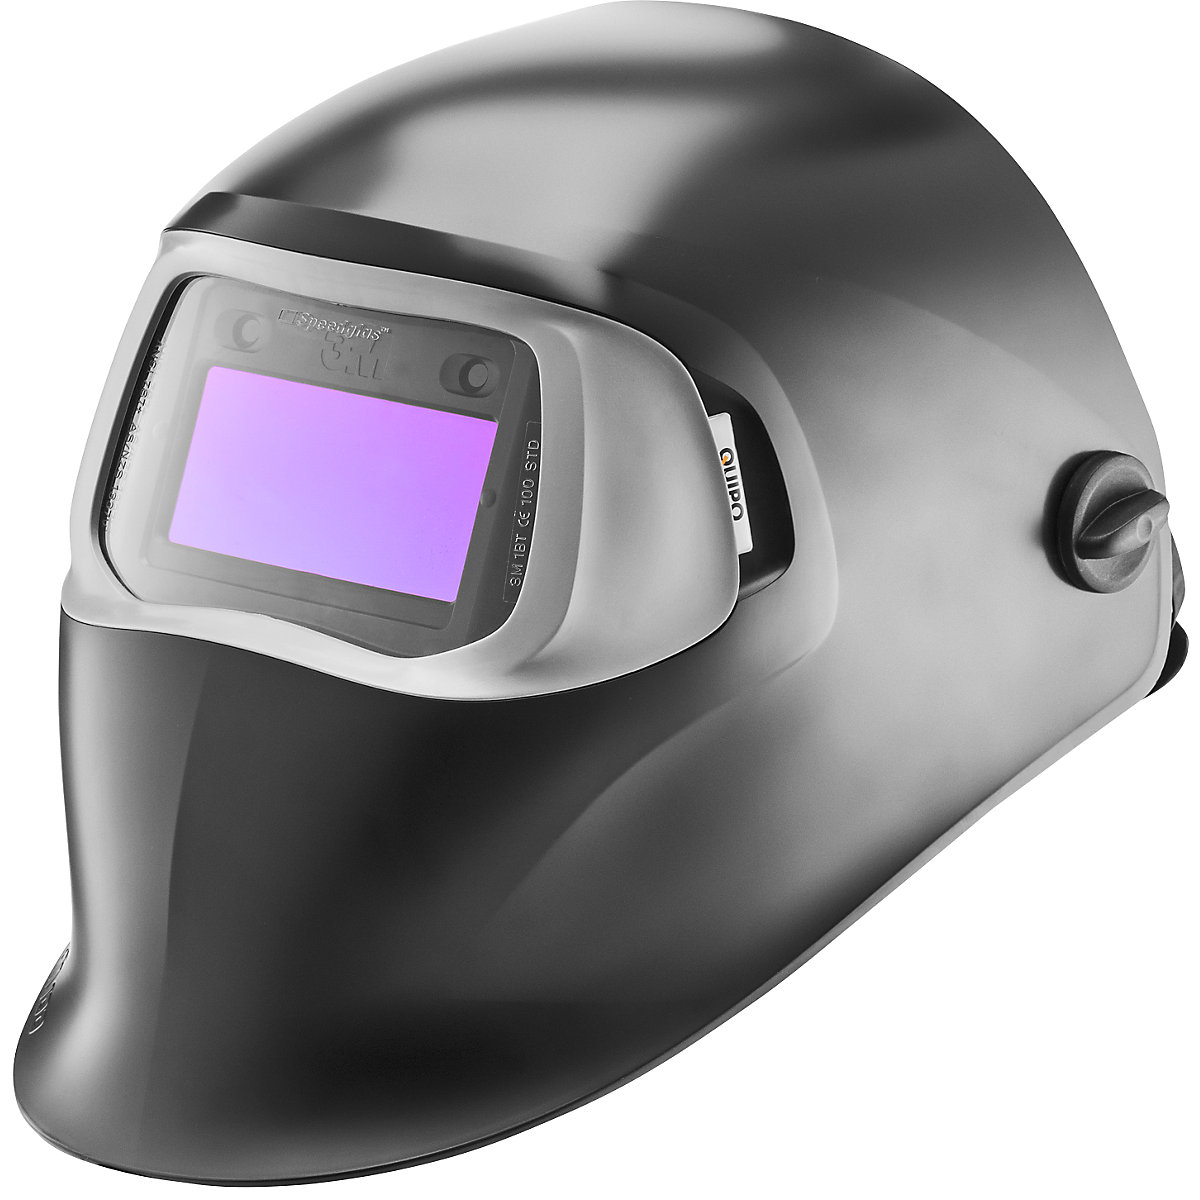 Automatic welding helmet